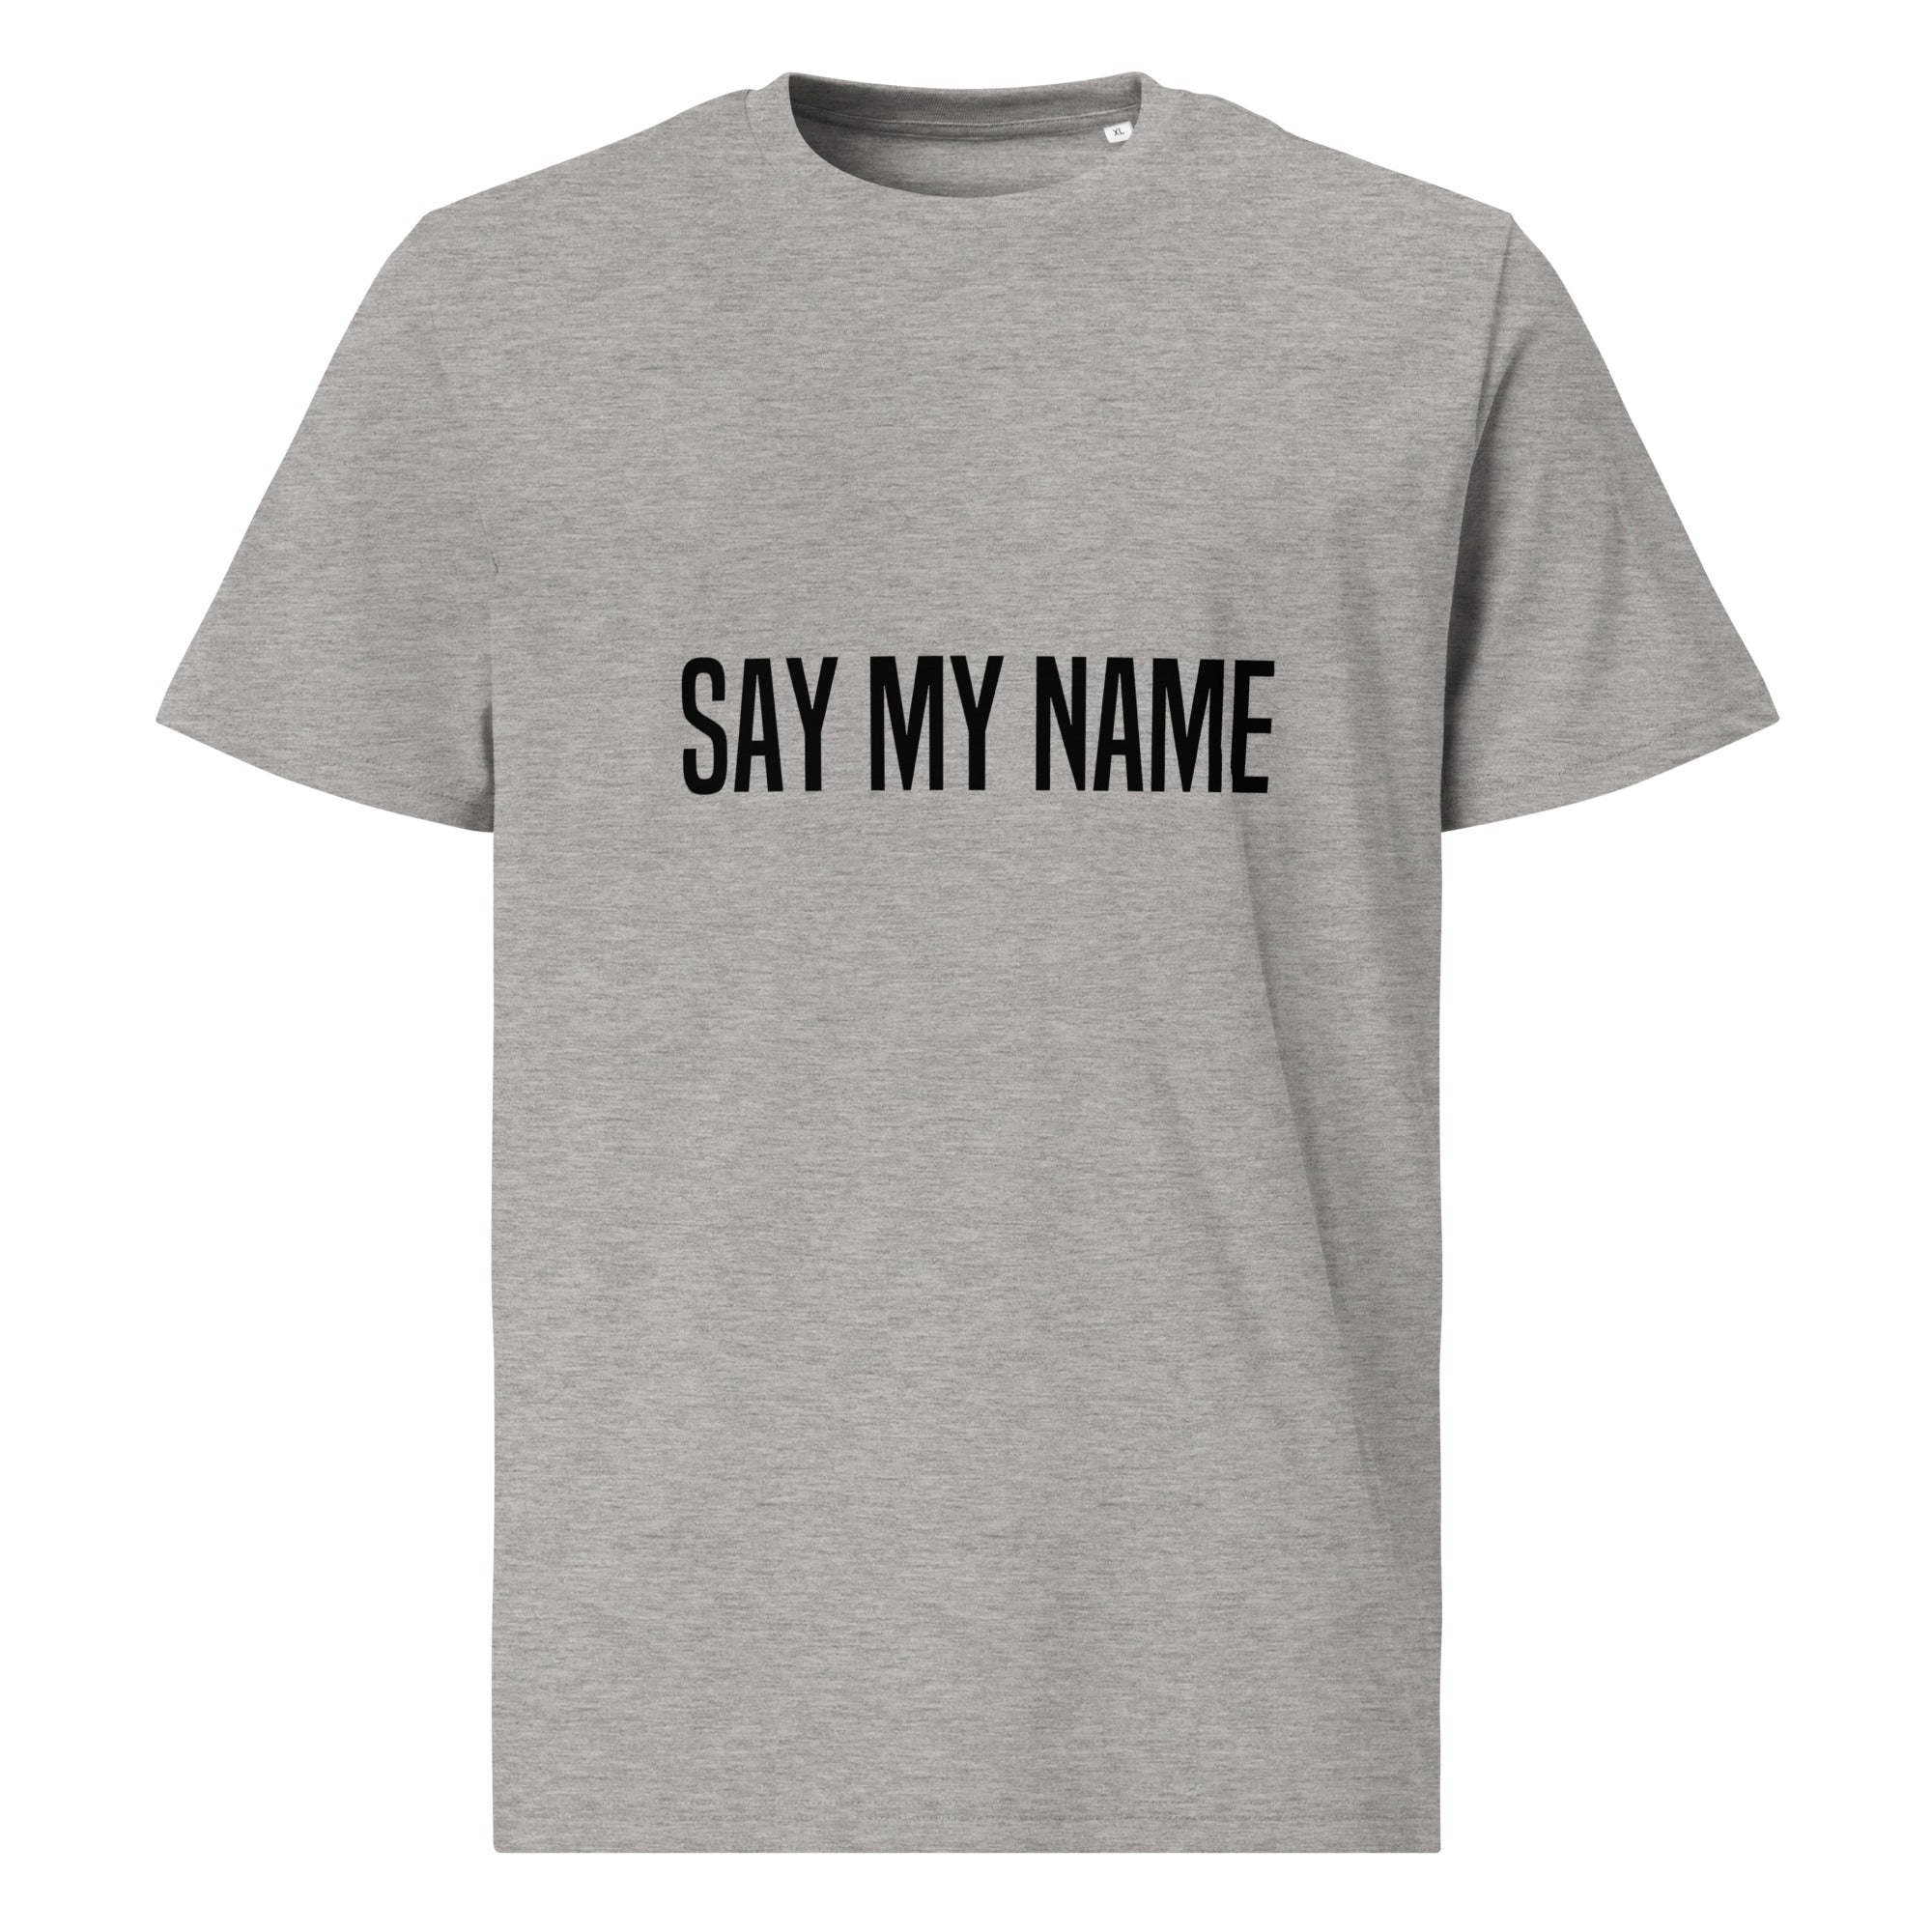 CSG unisex T-SHIRT “SAY MY NAME” black